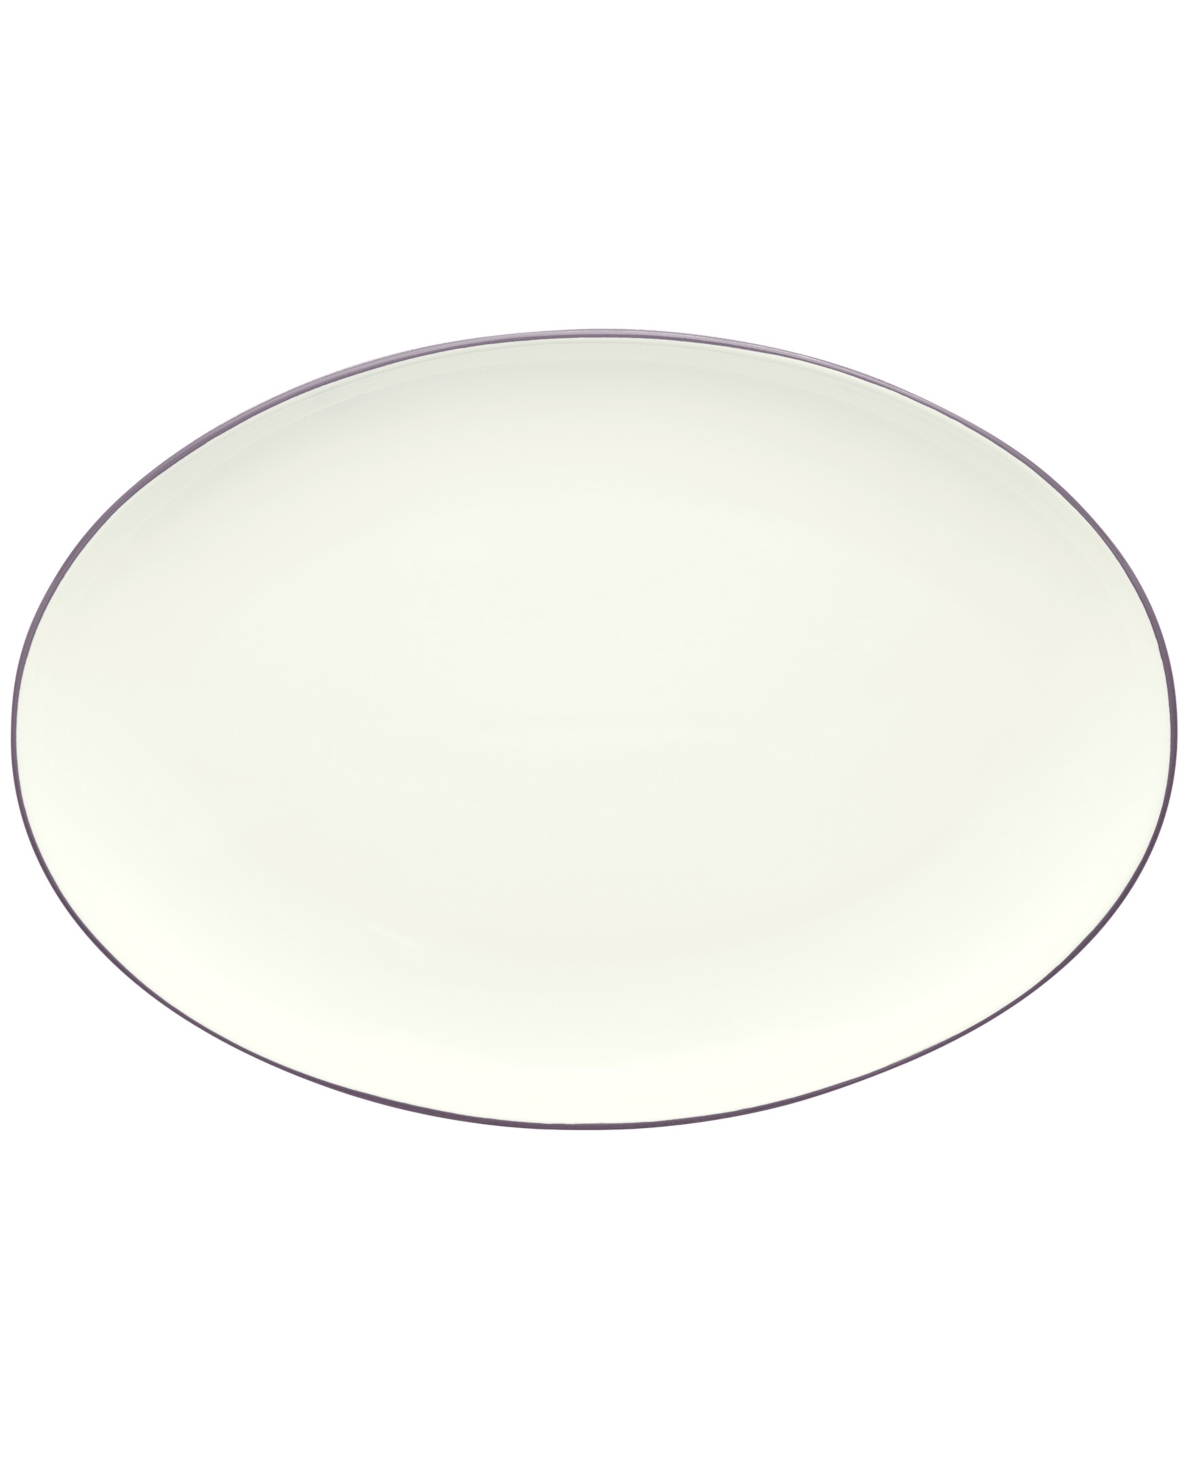 Noritake Colorwave 16" Oval Platter In Plum